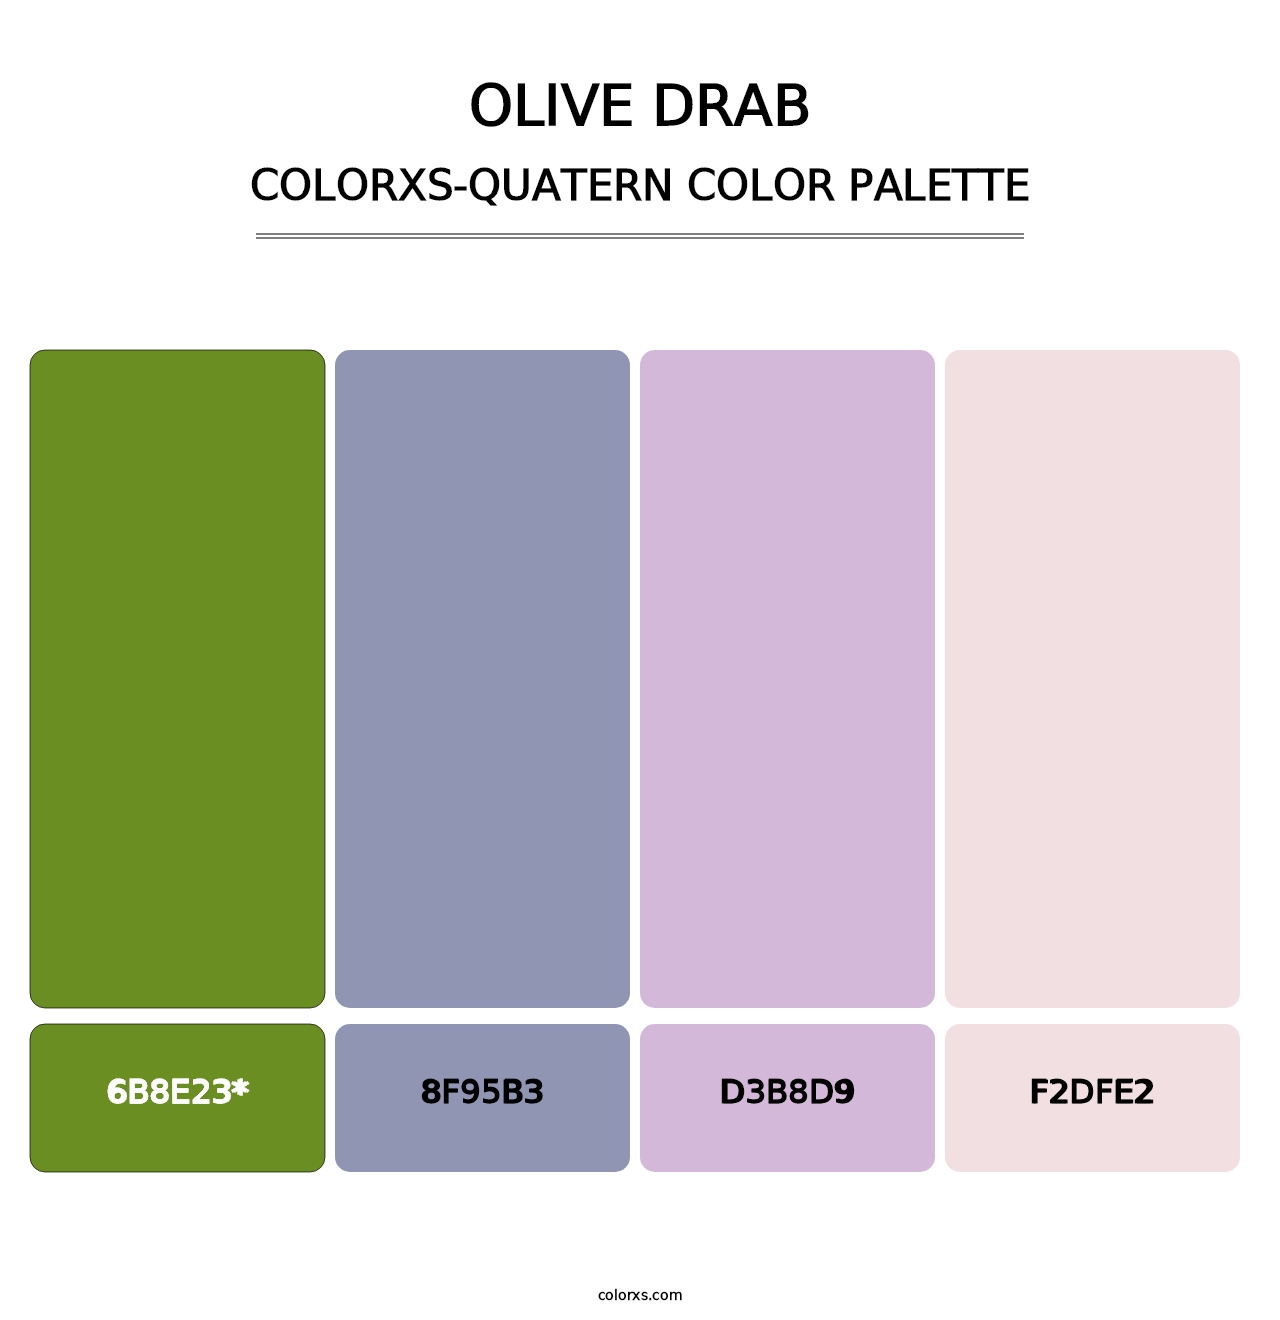 Olive Drab - Colorxs Quatern Palette